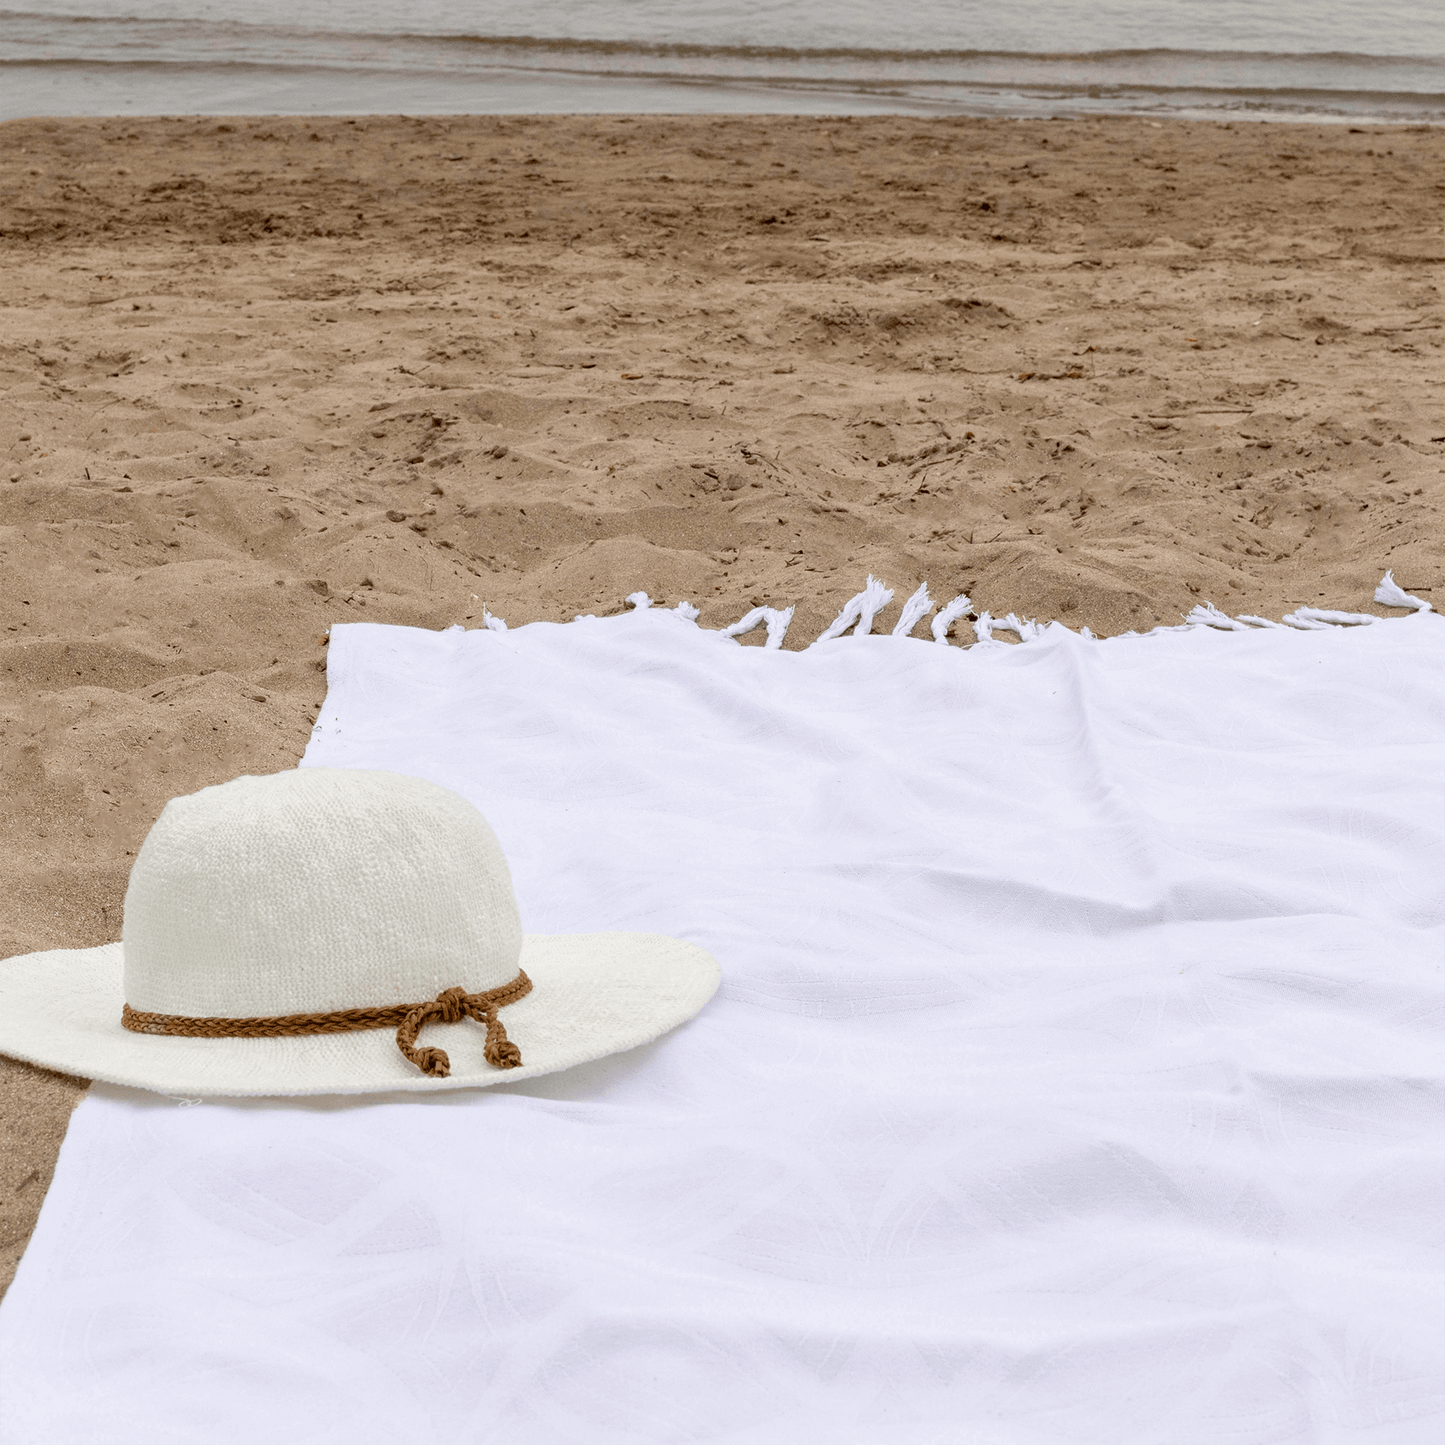 white Turkish towel at a beach